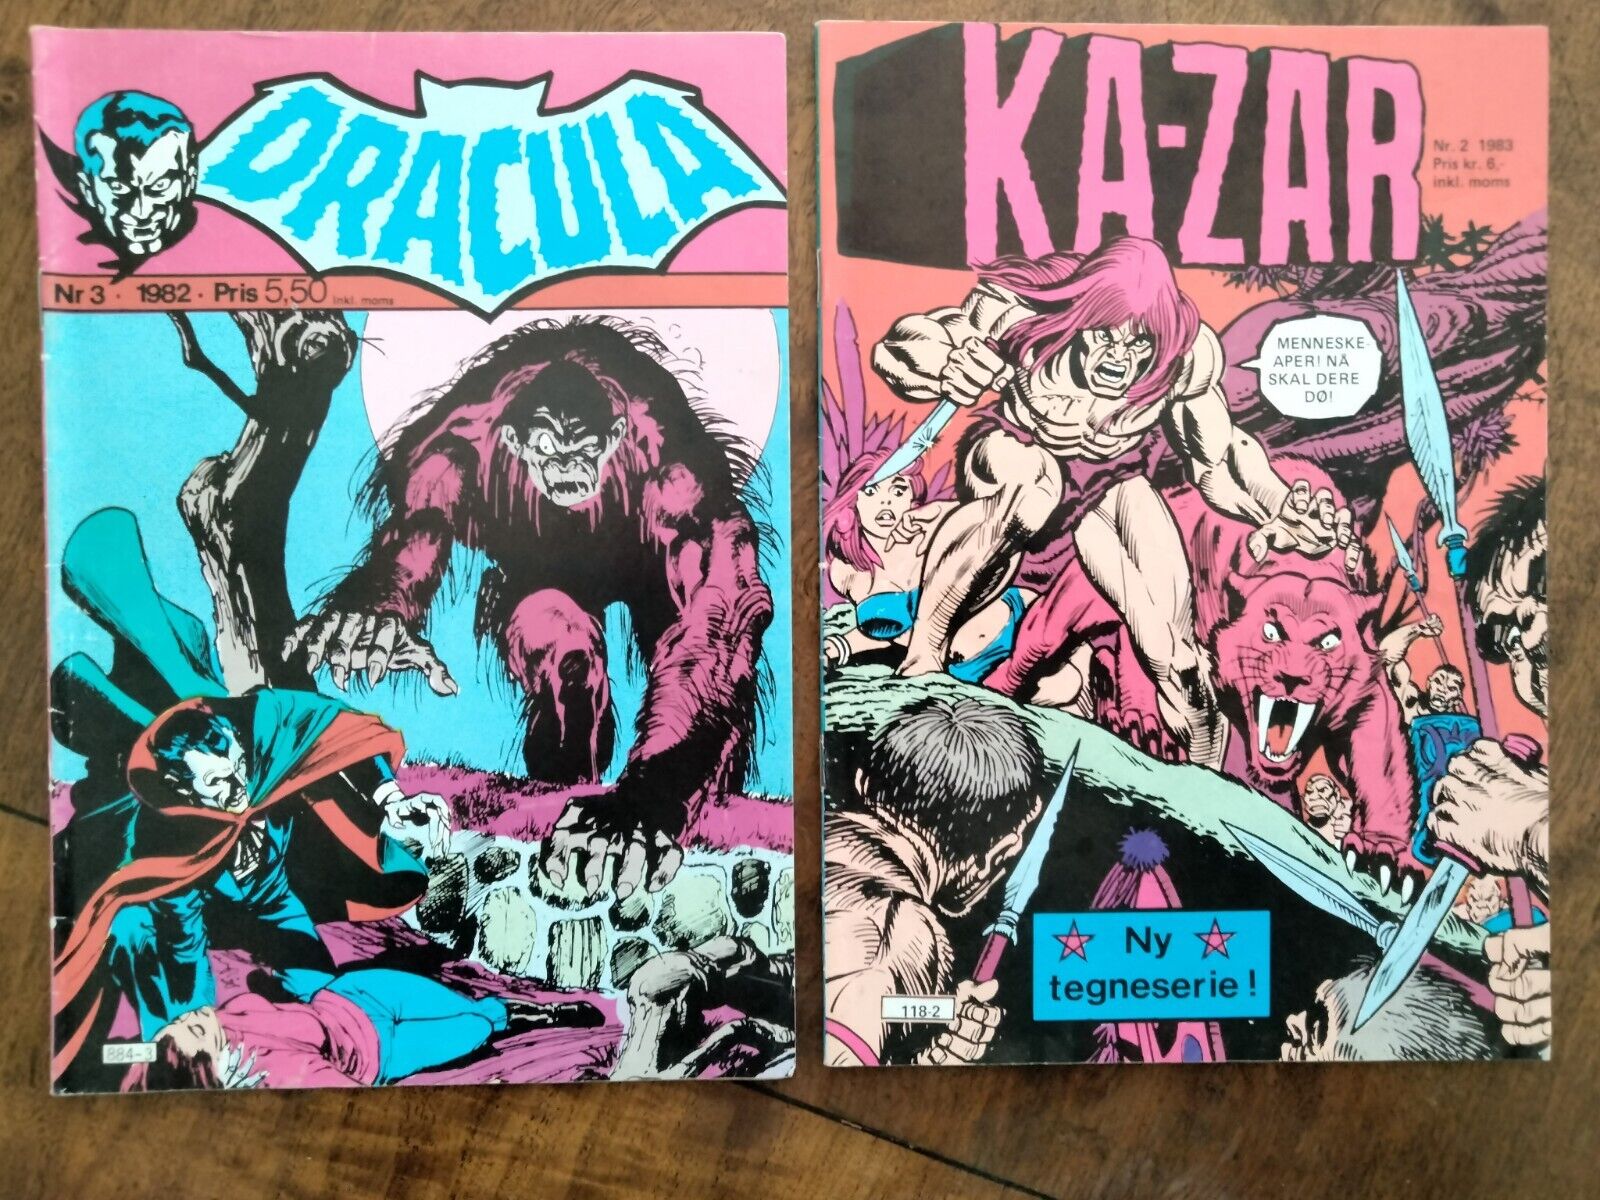 Norway Comics Dracula #3 and Kazar #2 Print Errors Rare